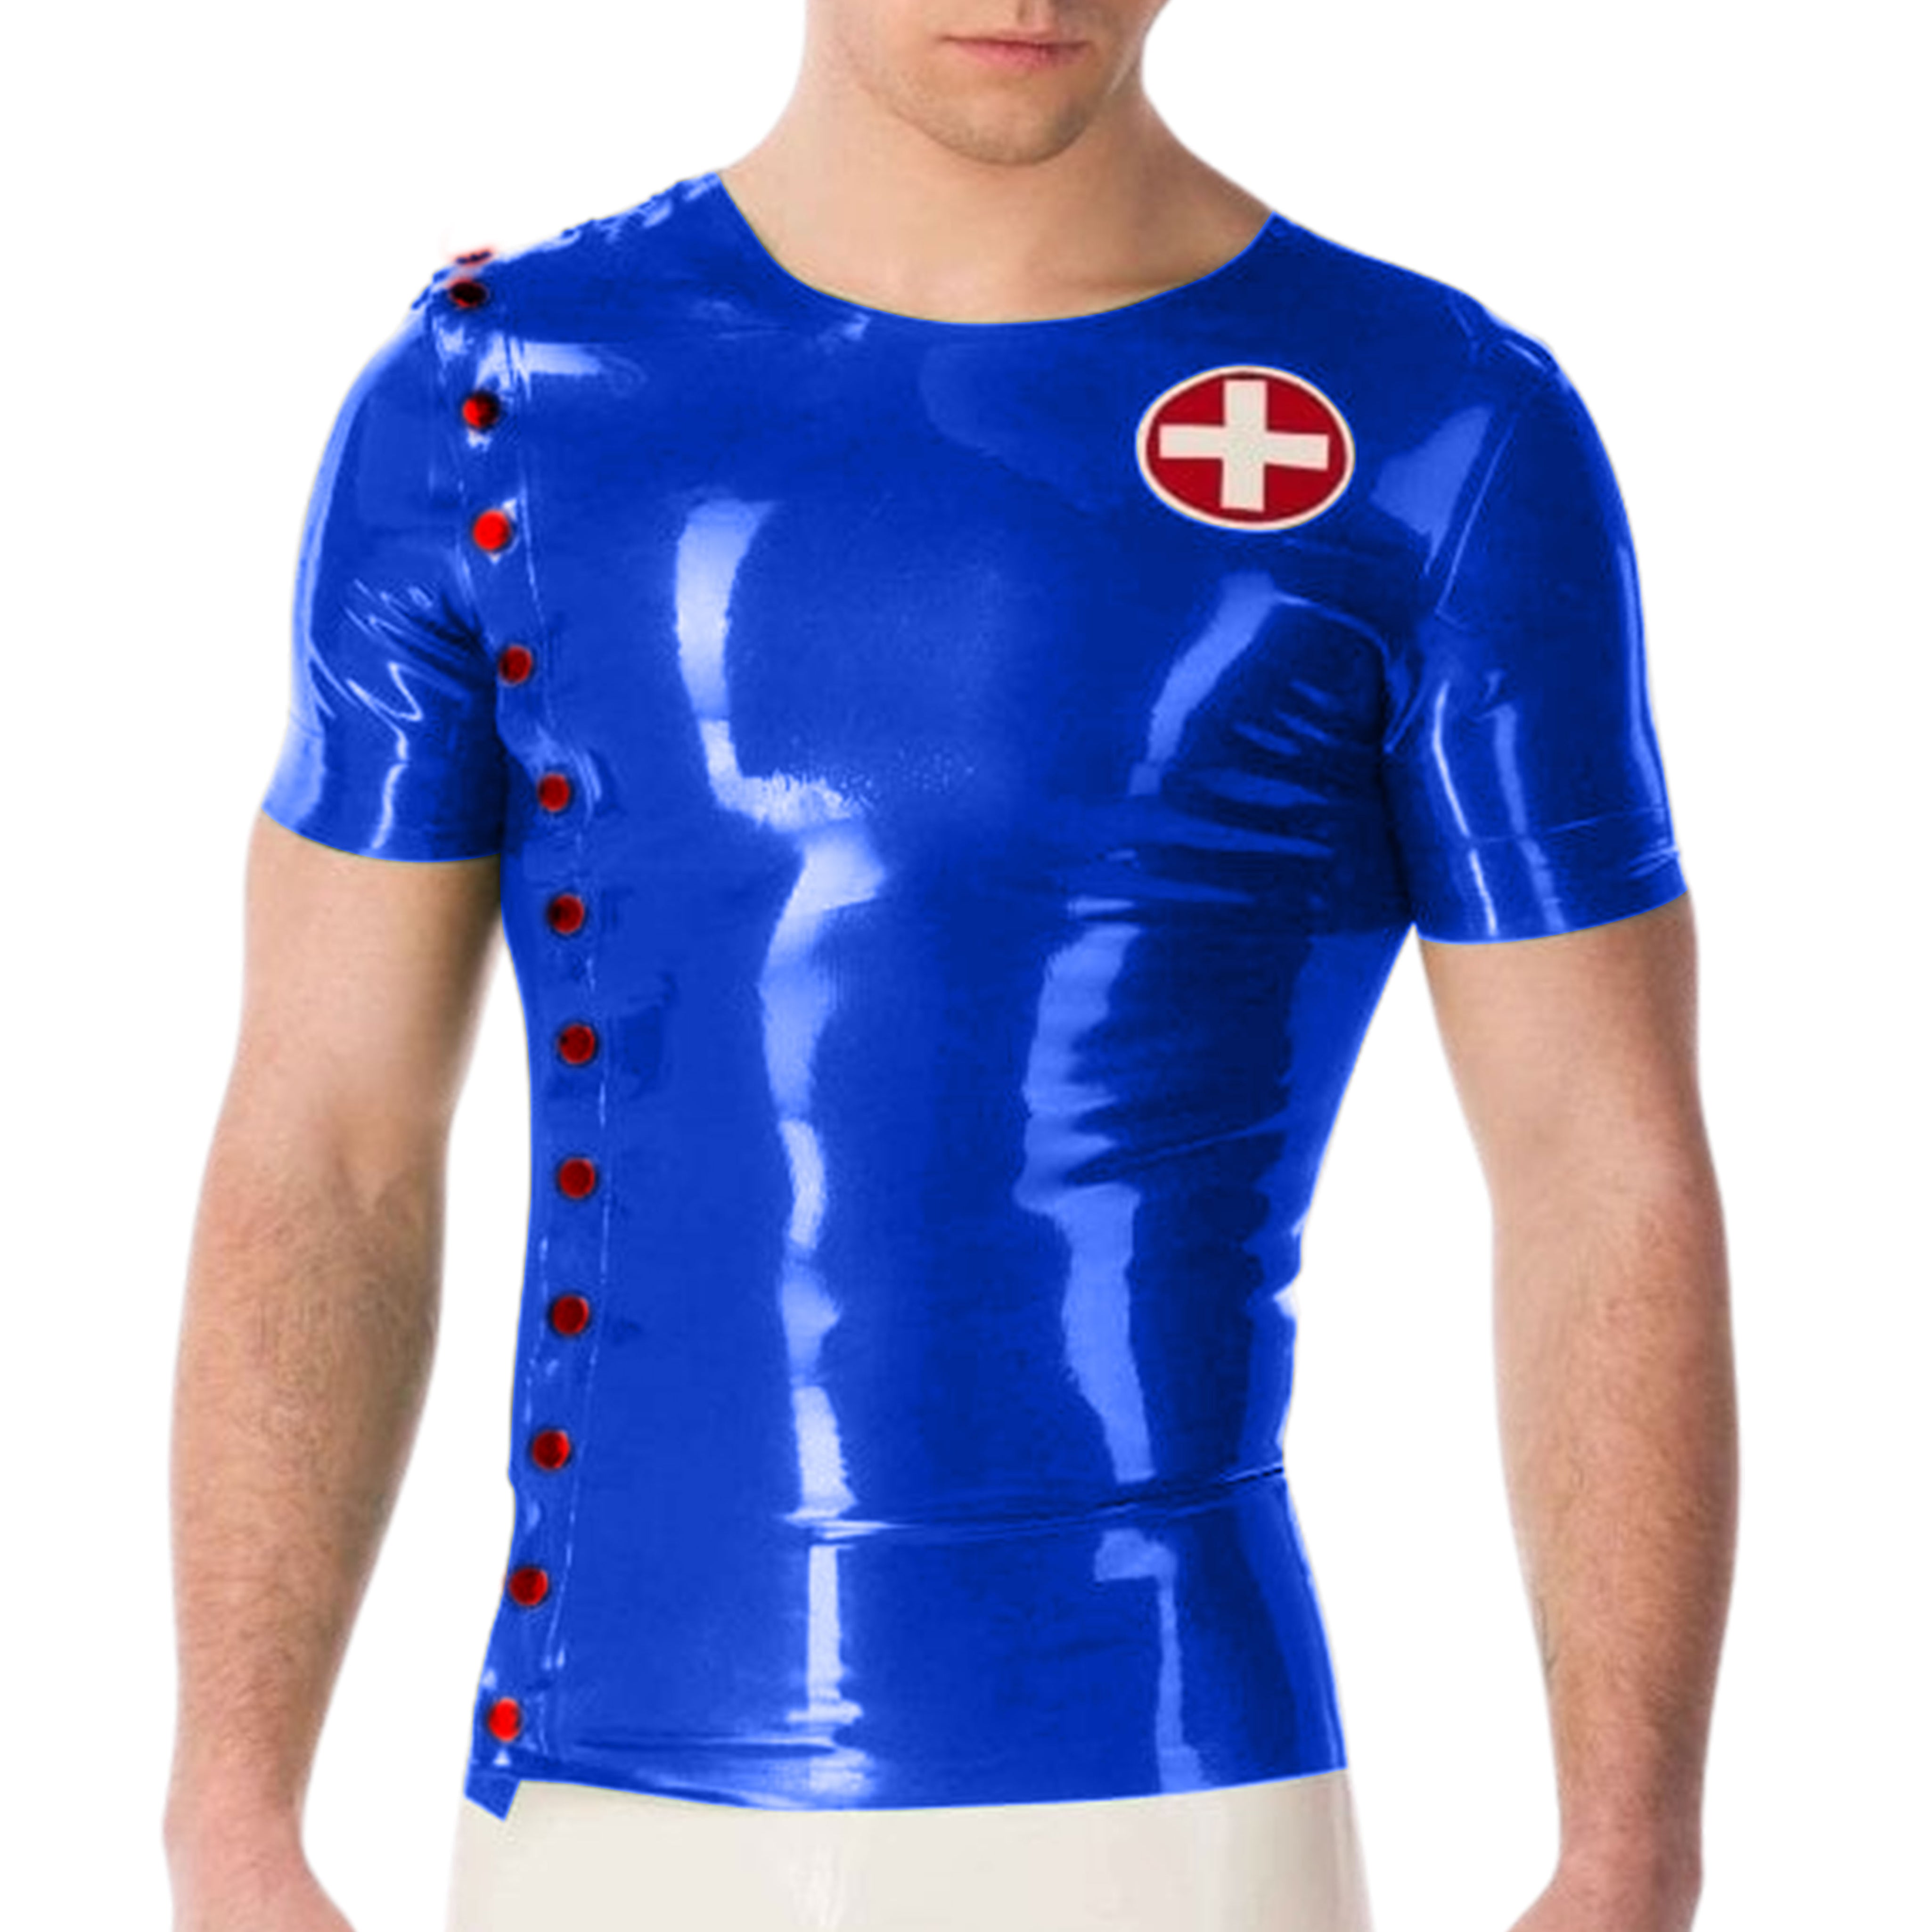 Mens Latex Medical Snap Front Shirt Azure Blue M